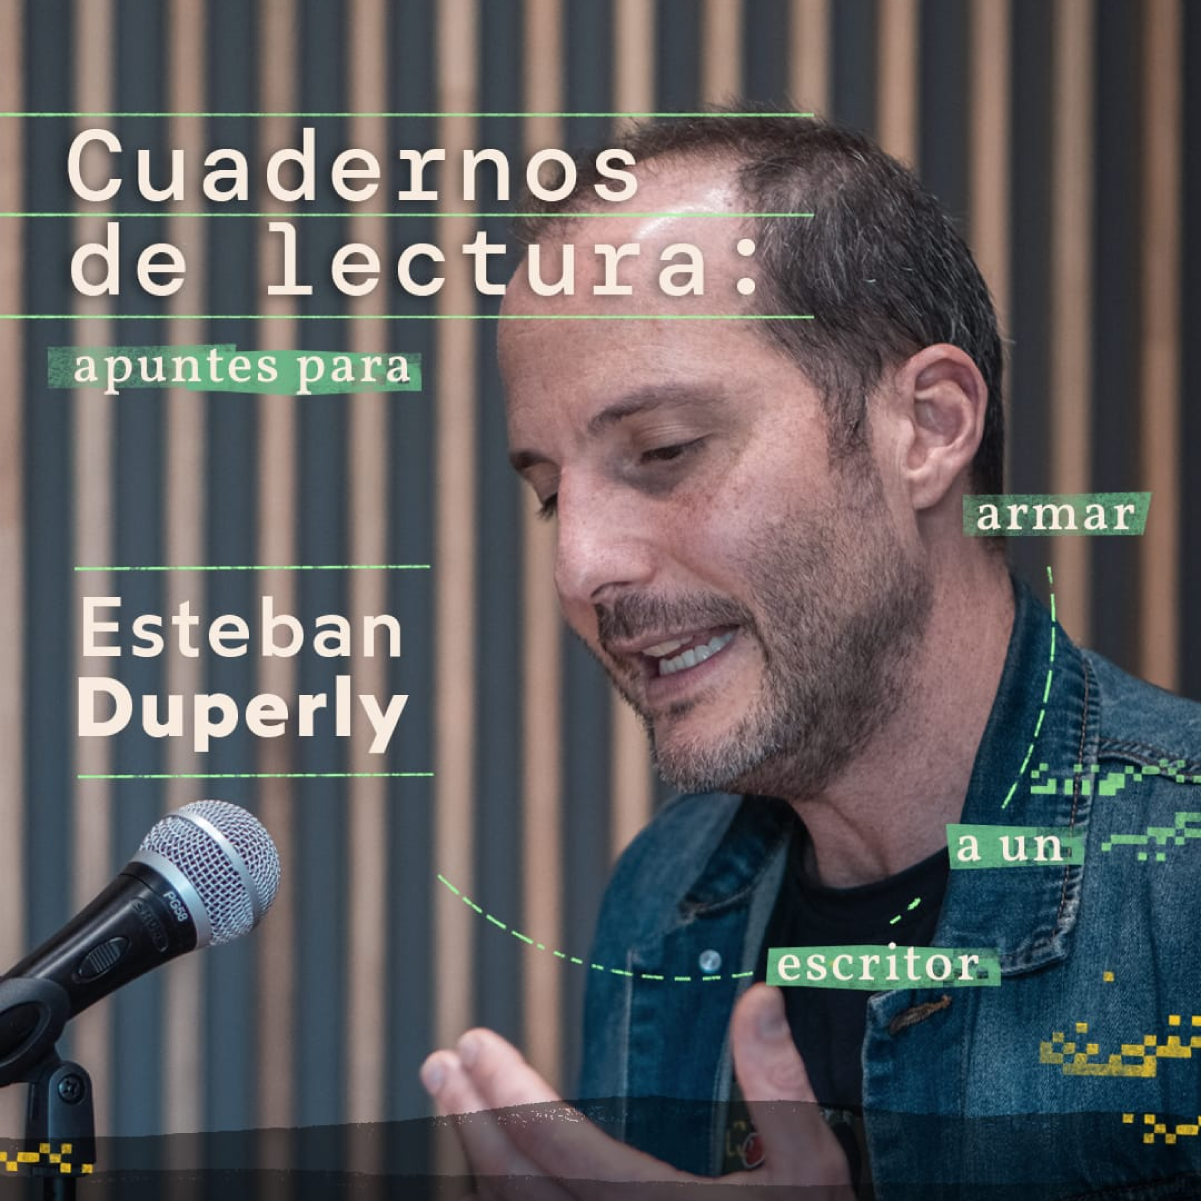 Esteban Duperly